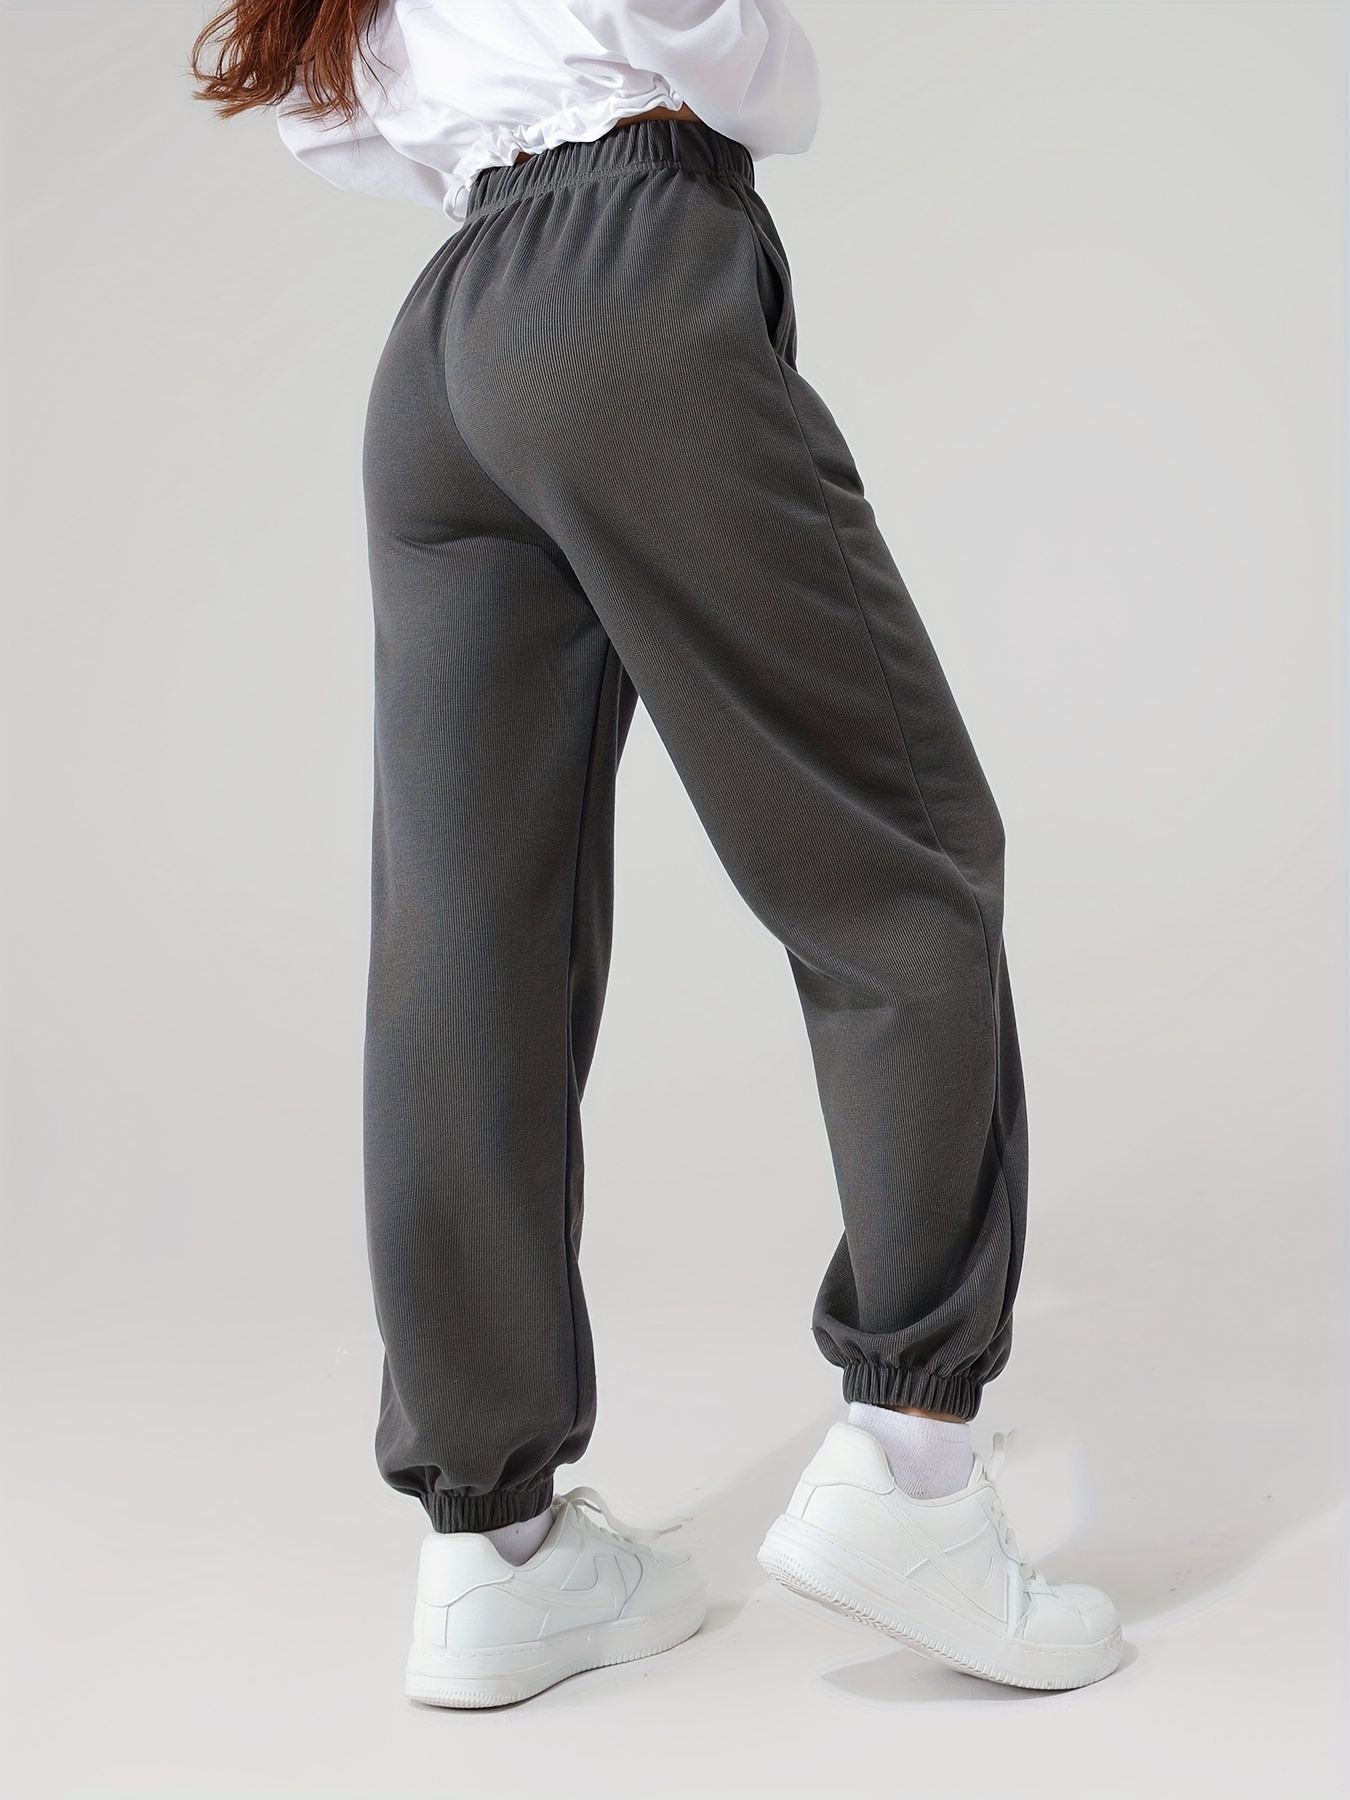 Women Sport Pants Solid Color Elastic High Waisted Sweatpant Comfy